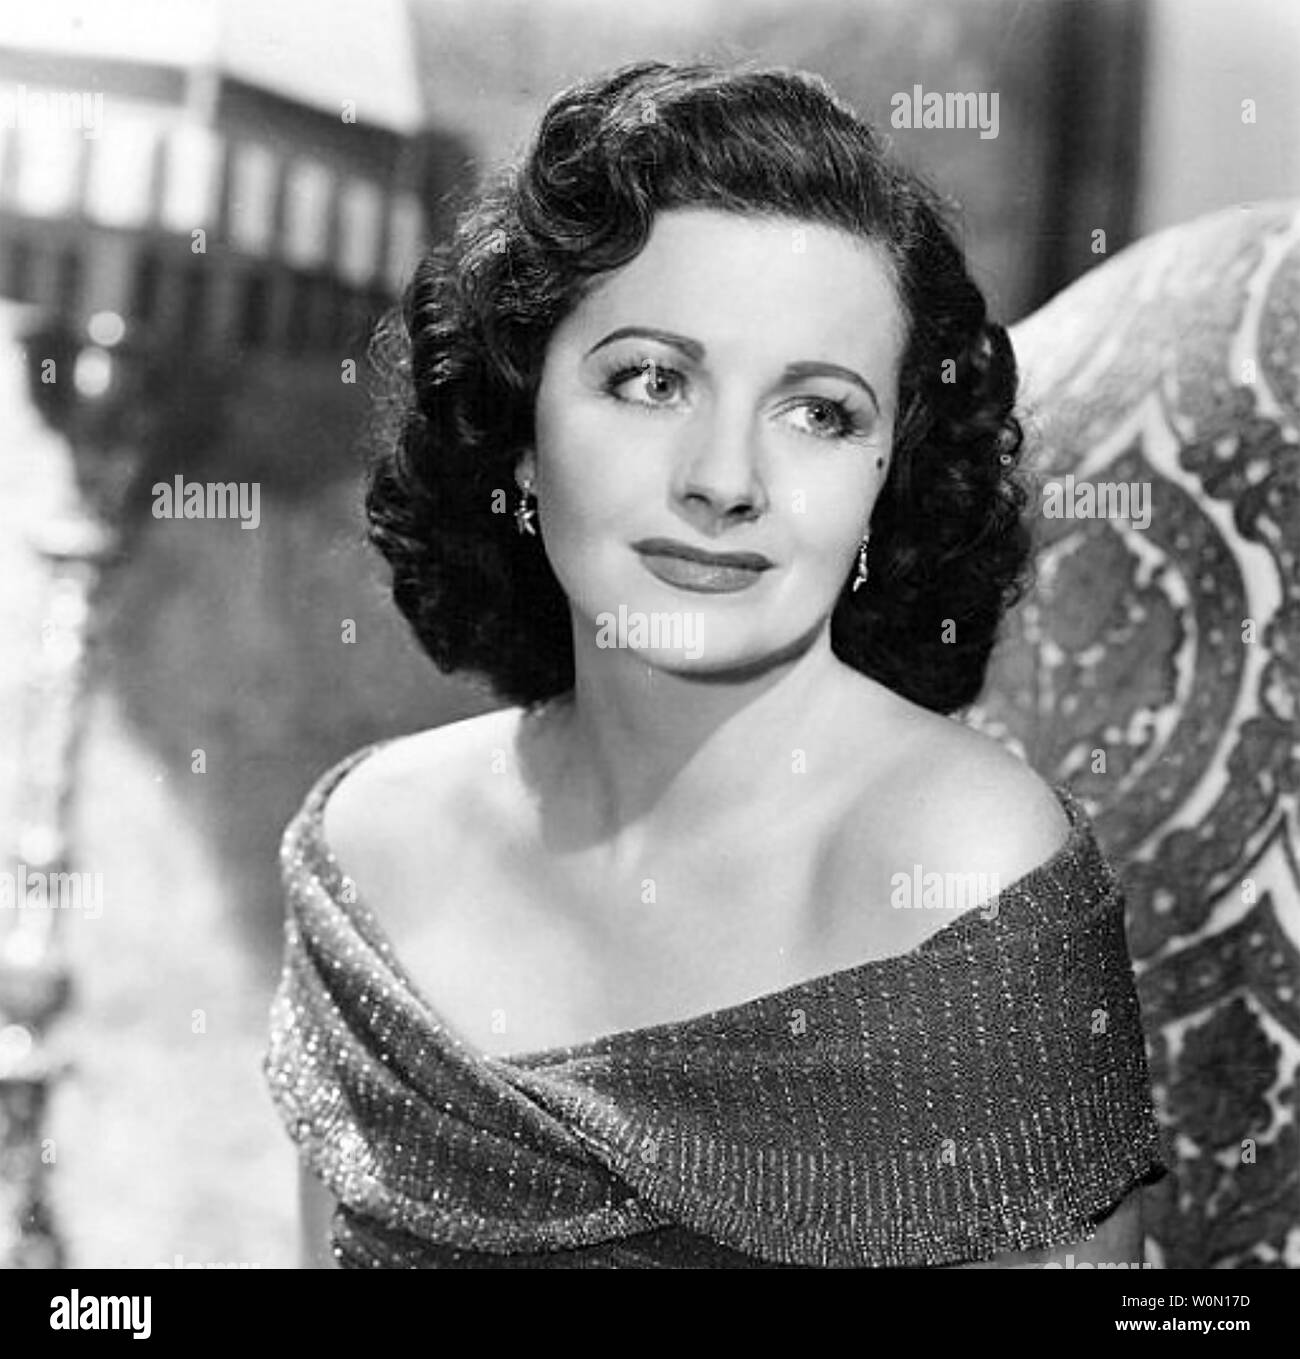 TROUBLE IN THE GLEN 1954 Repubblica Pictures film con Margaret Lockwood Foto Stock